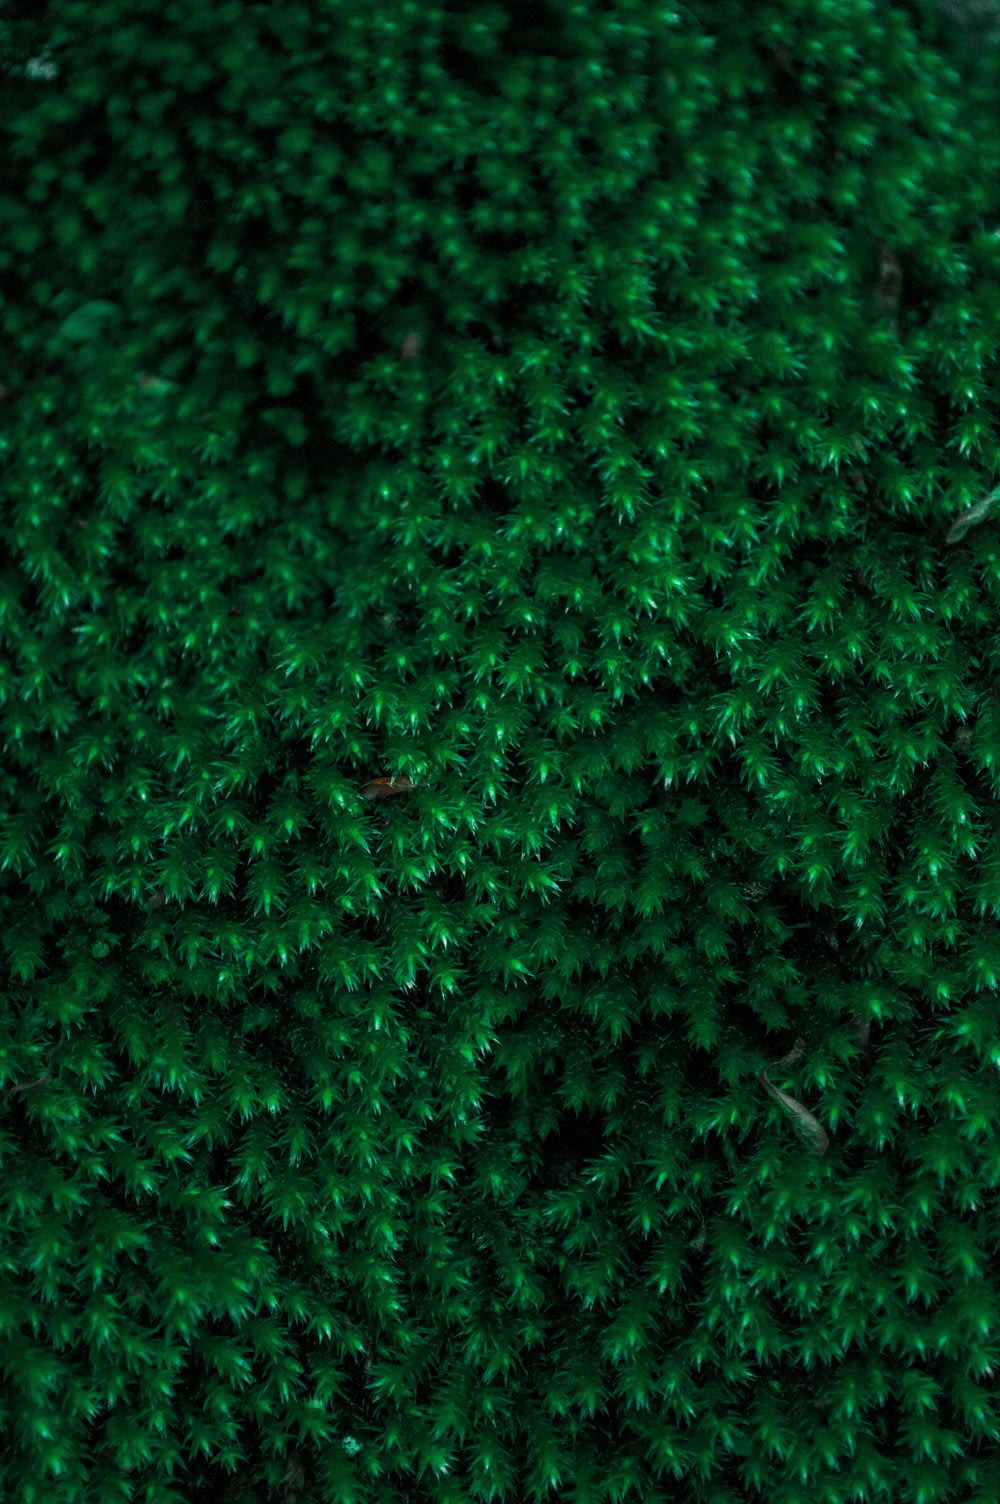 Grünes Gras in Nahaufnahmen